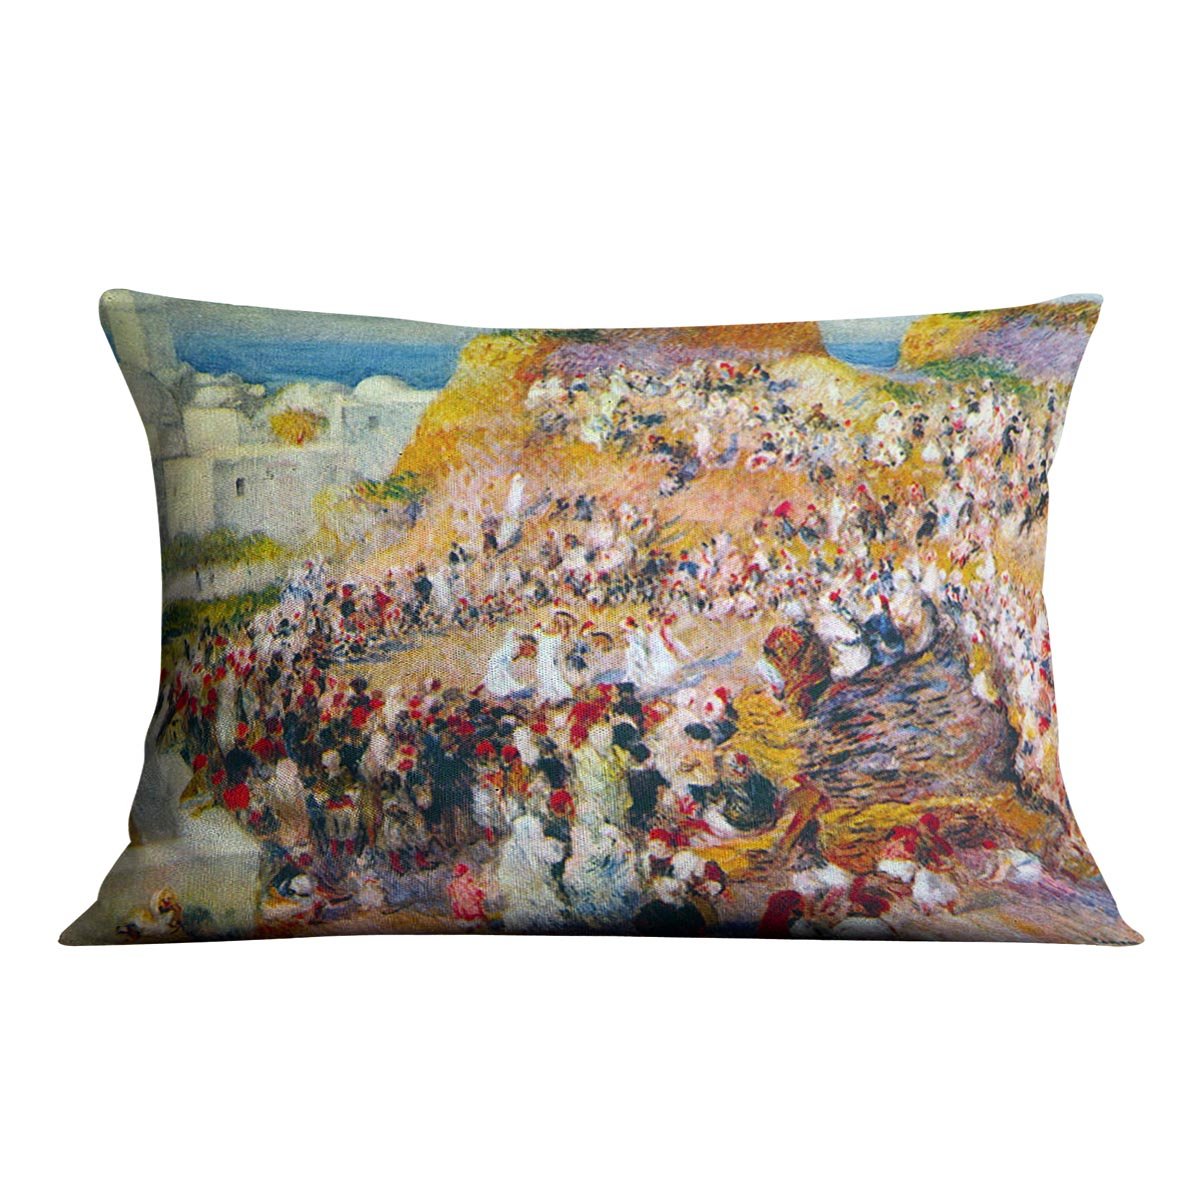 The mosque Arabian Fest by Renoir Throw Pillow